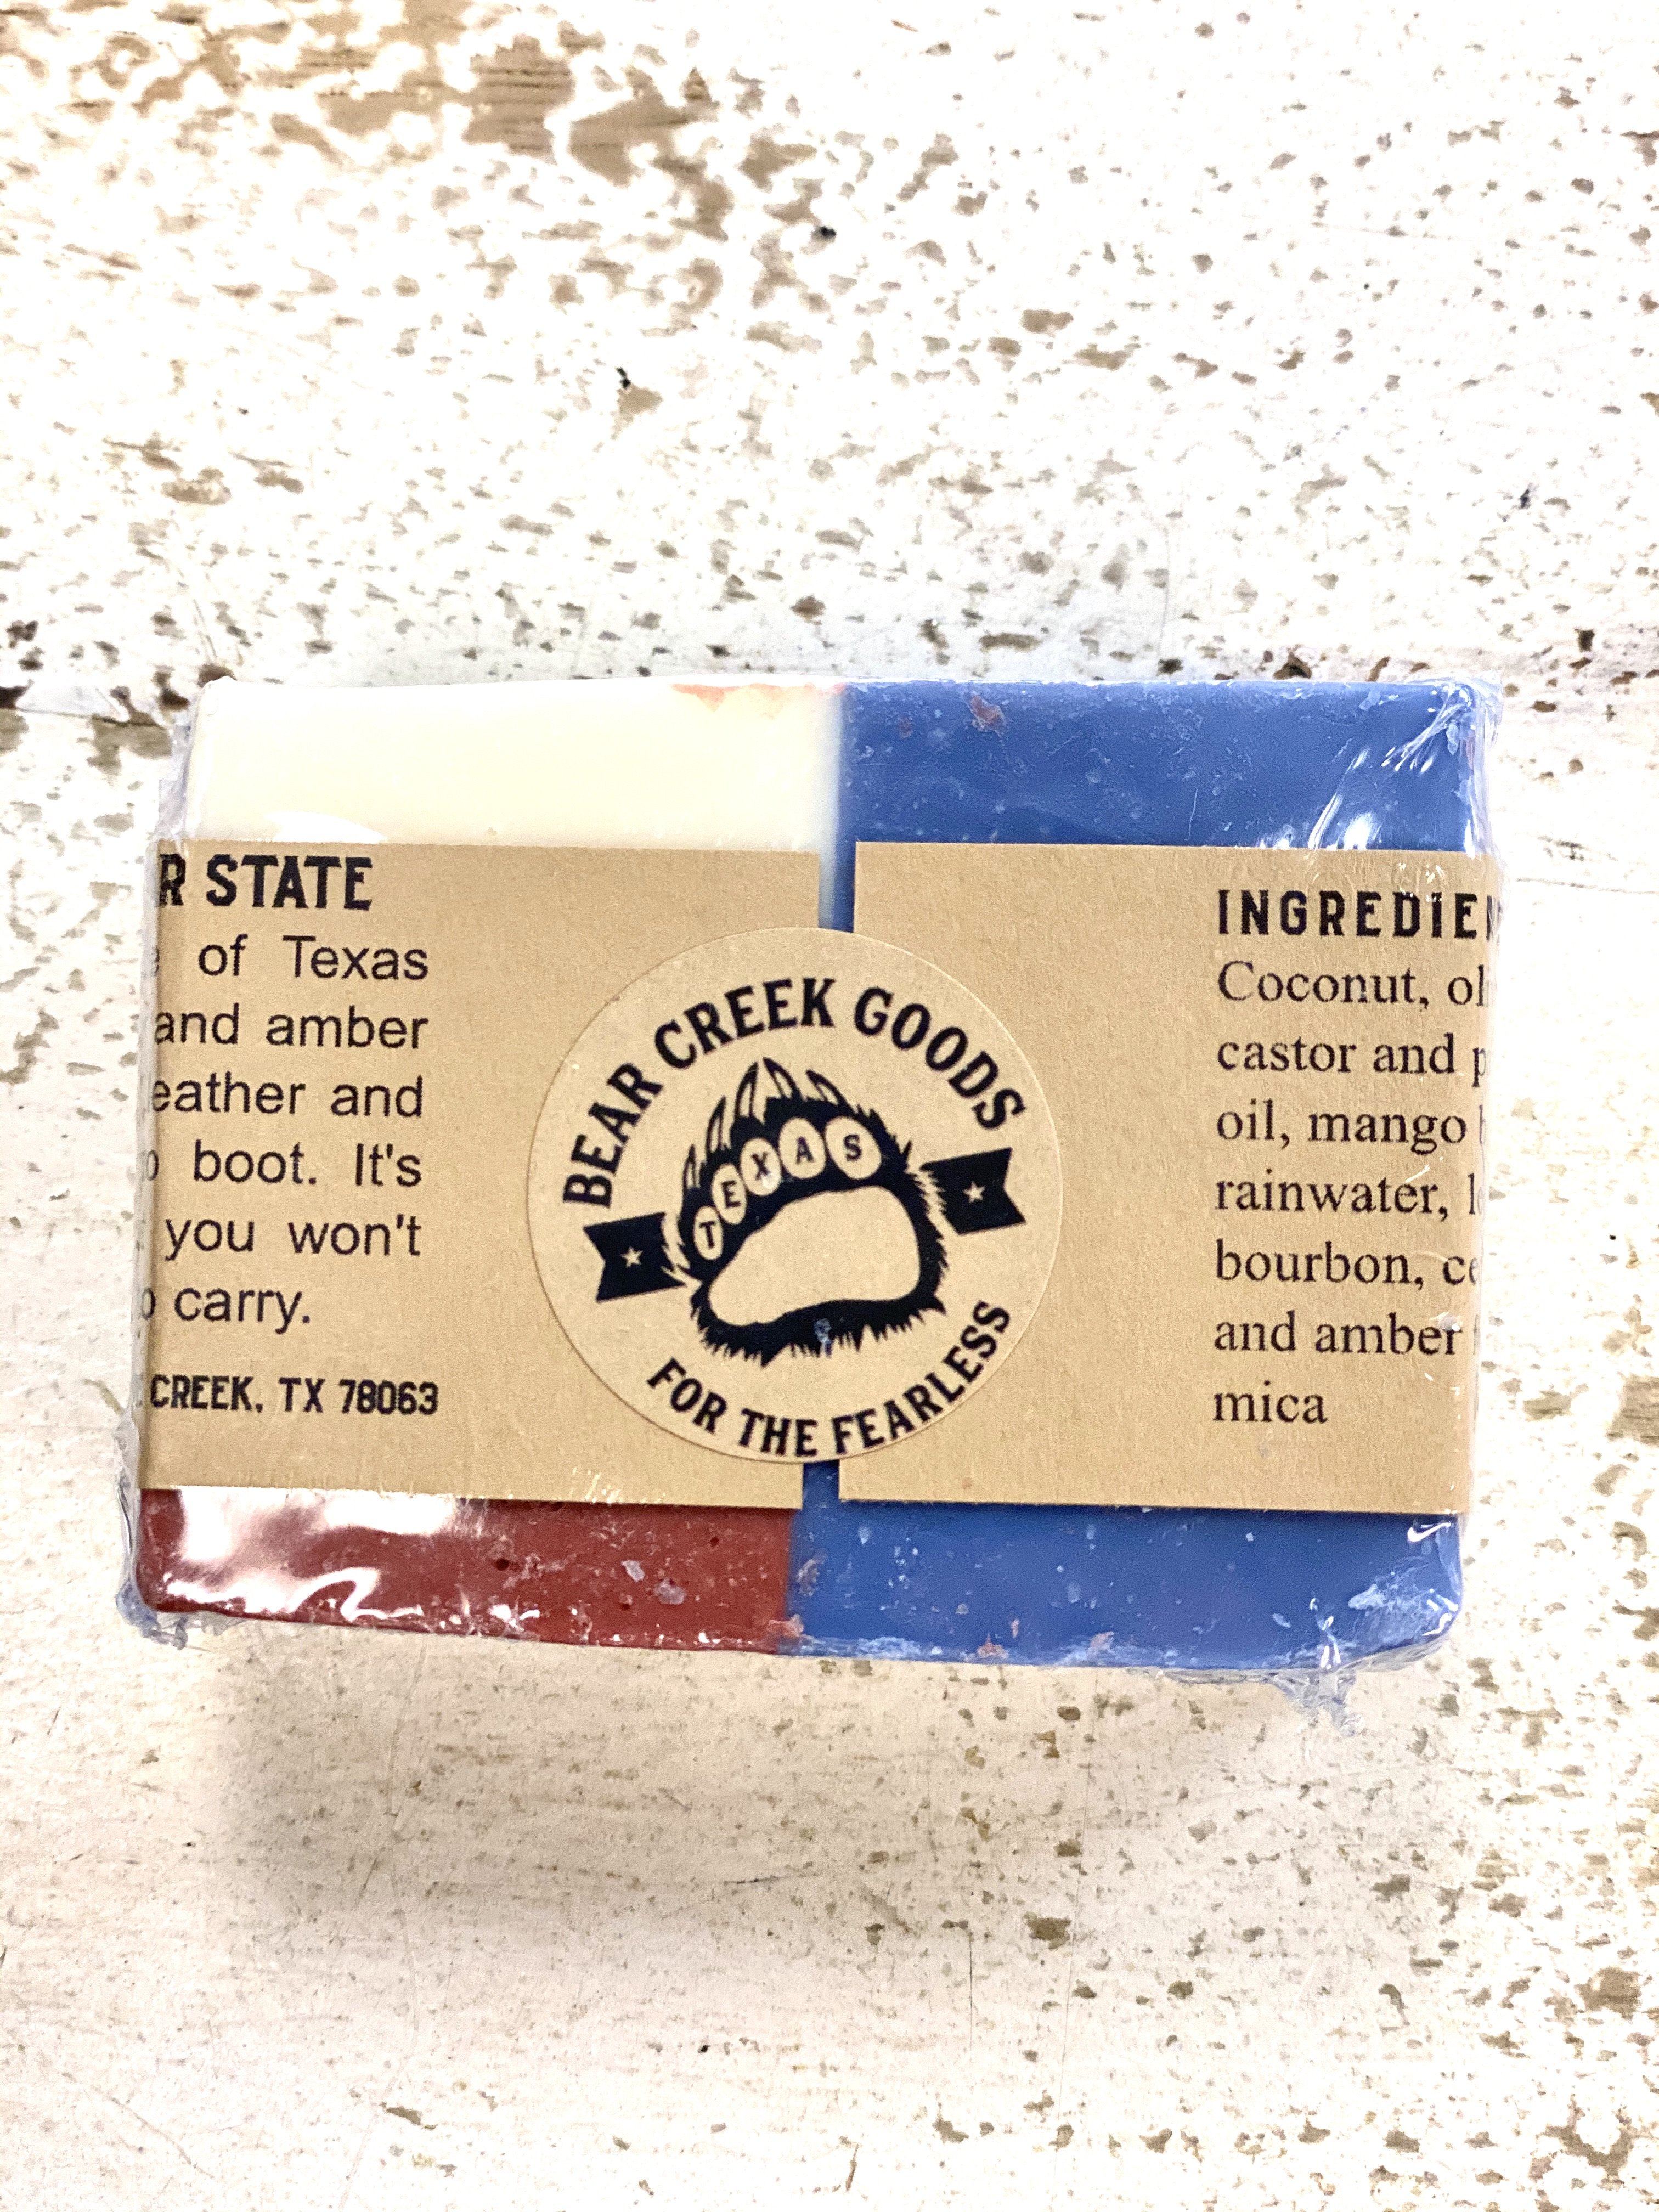 Bear Creek Goods - Lone Star Soap Bar